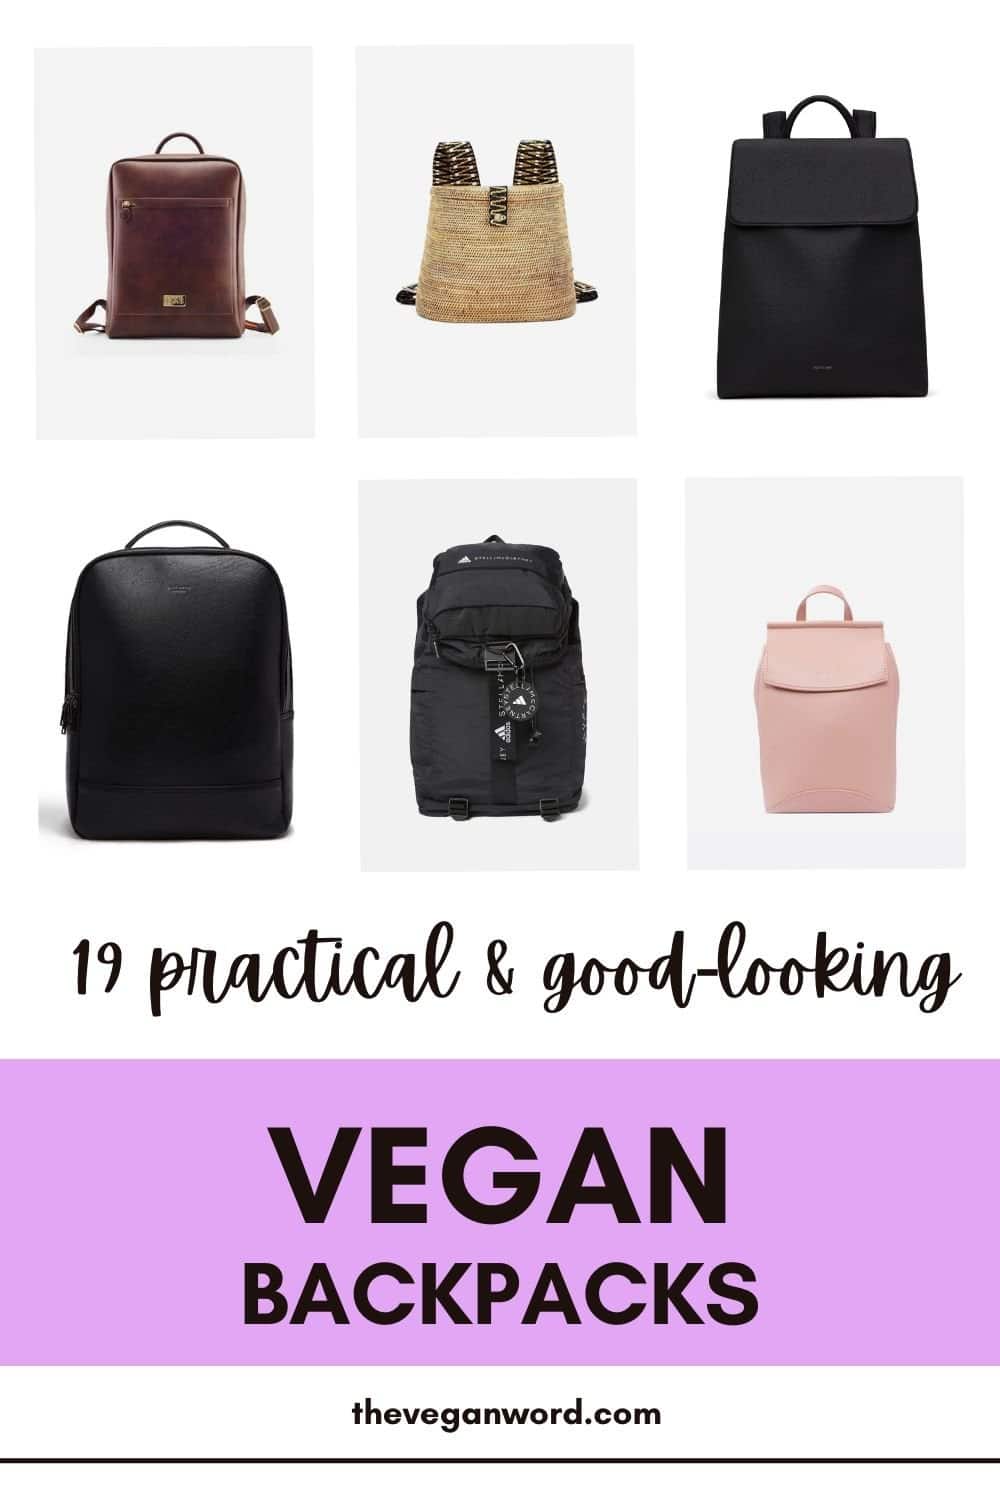 Pinterest image showing vegan backpacks and text that reads "19 practical & good-looking vegan backpacks"